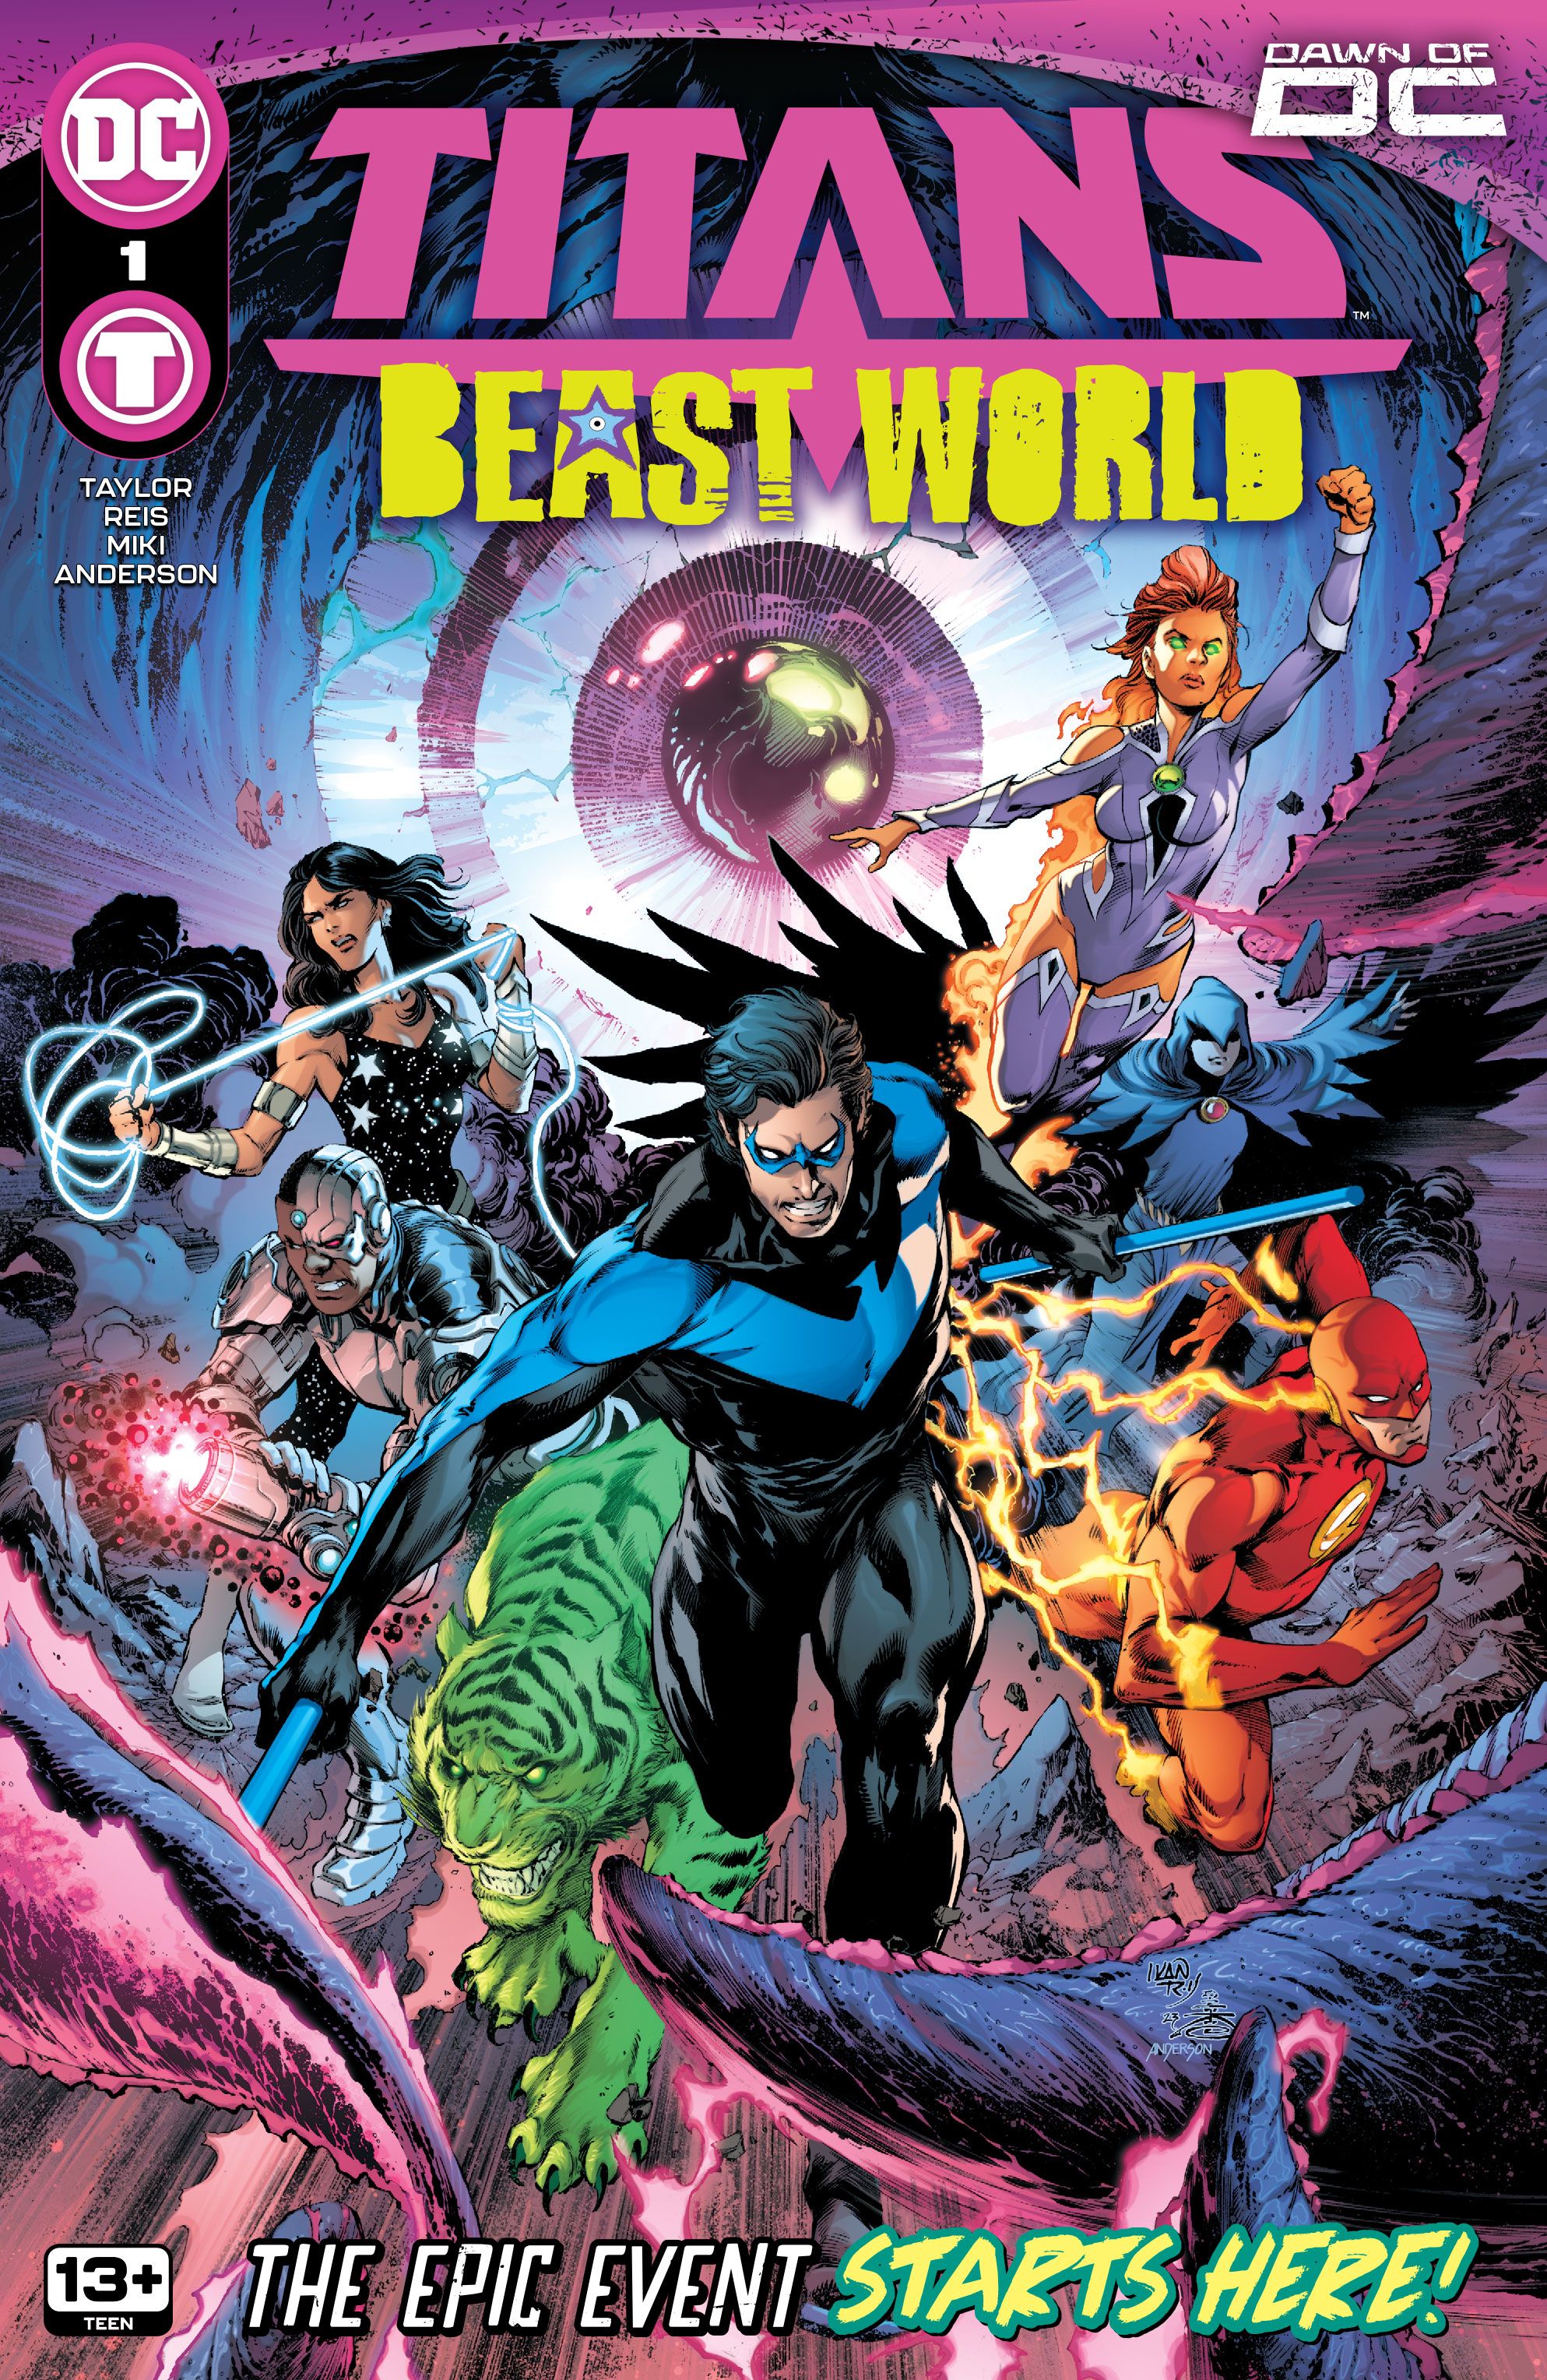 Titans: Beast World 1 Main Cover: Costumed superheroes battle tentacles.